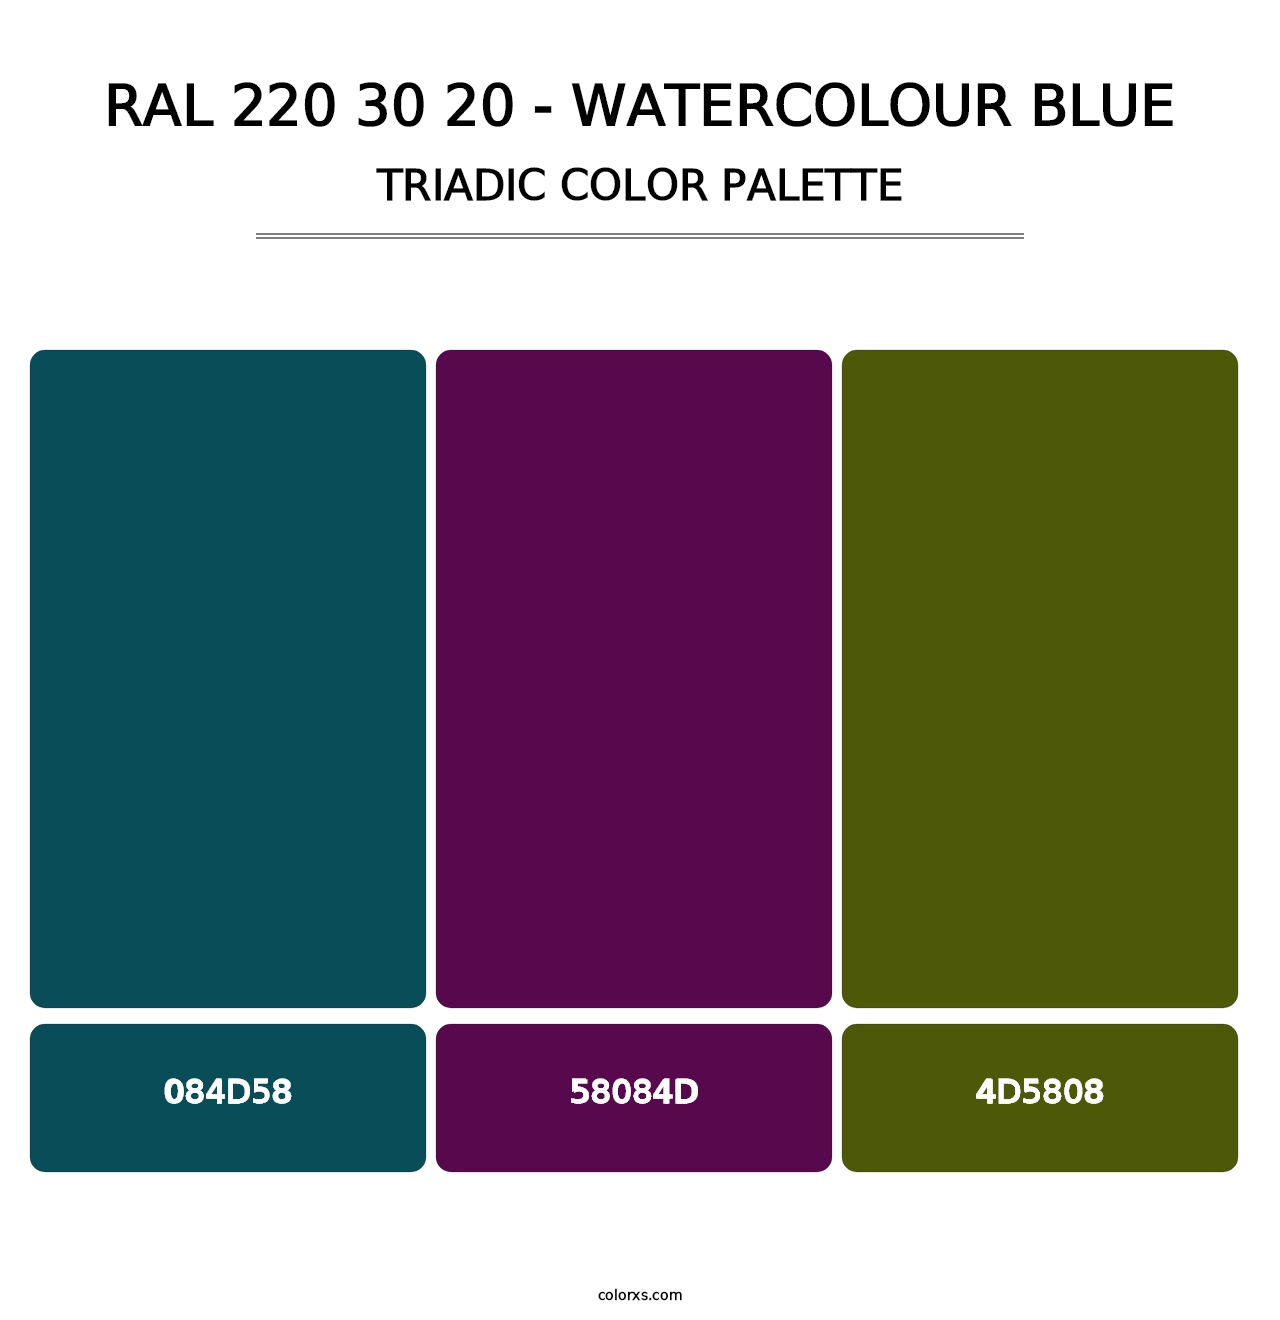 RAL 220 30 20 - Watercolour Blue - Triadic Color Palette